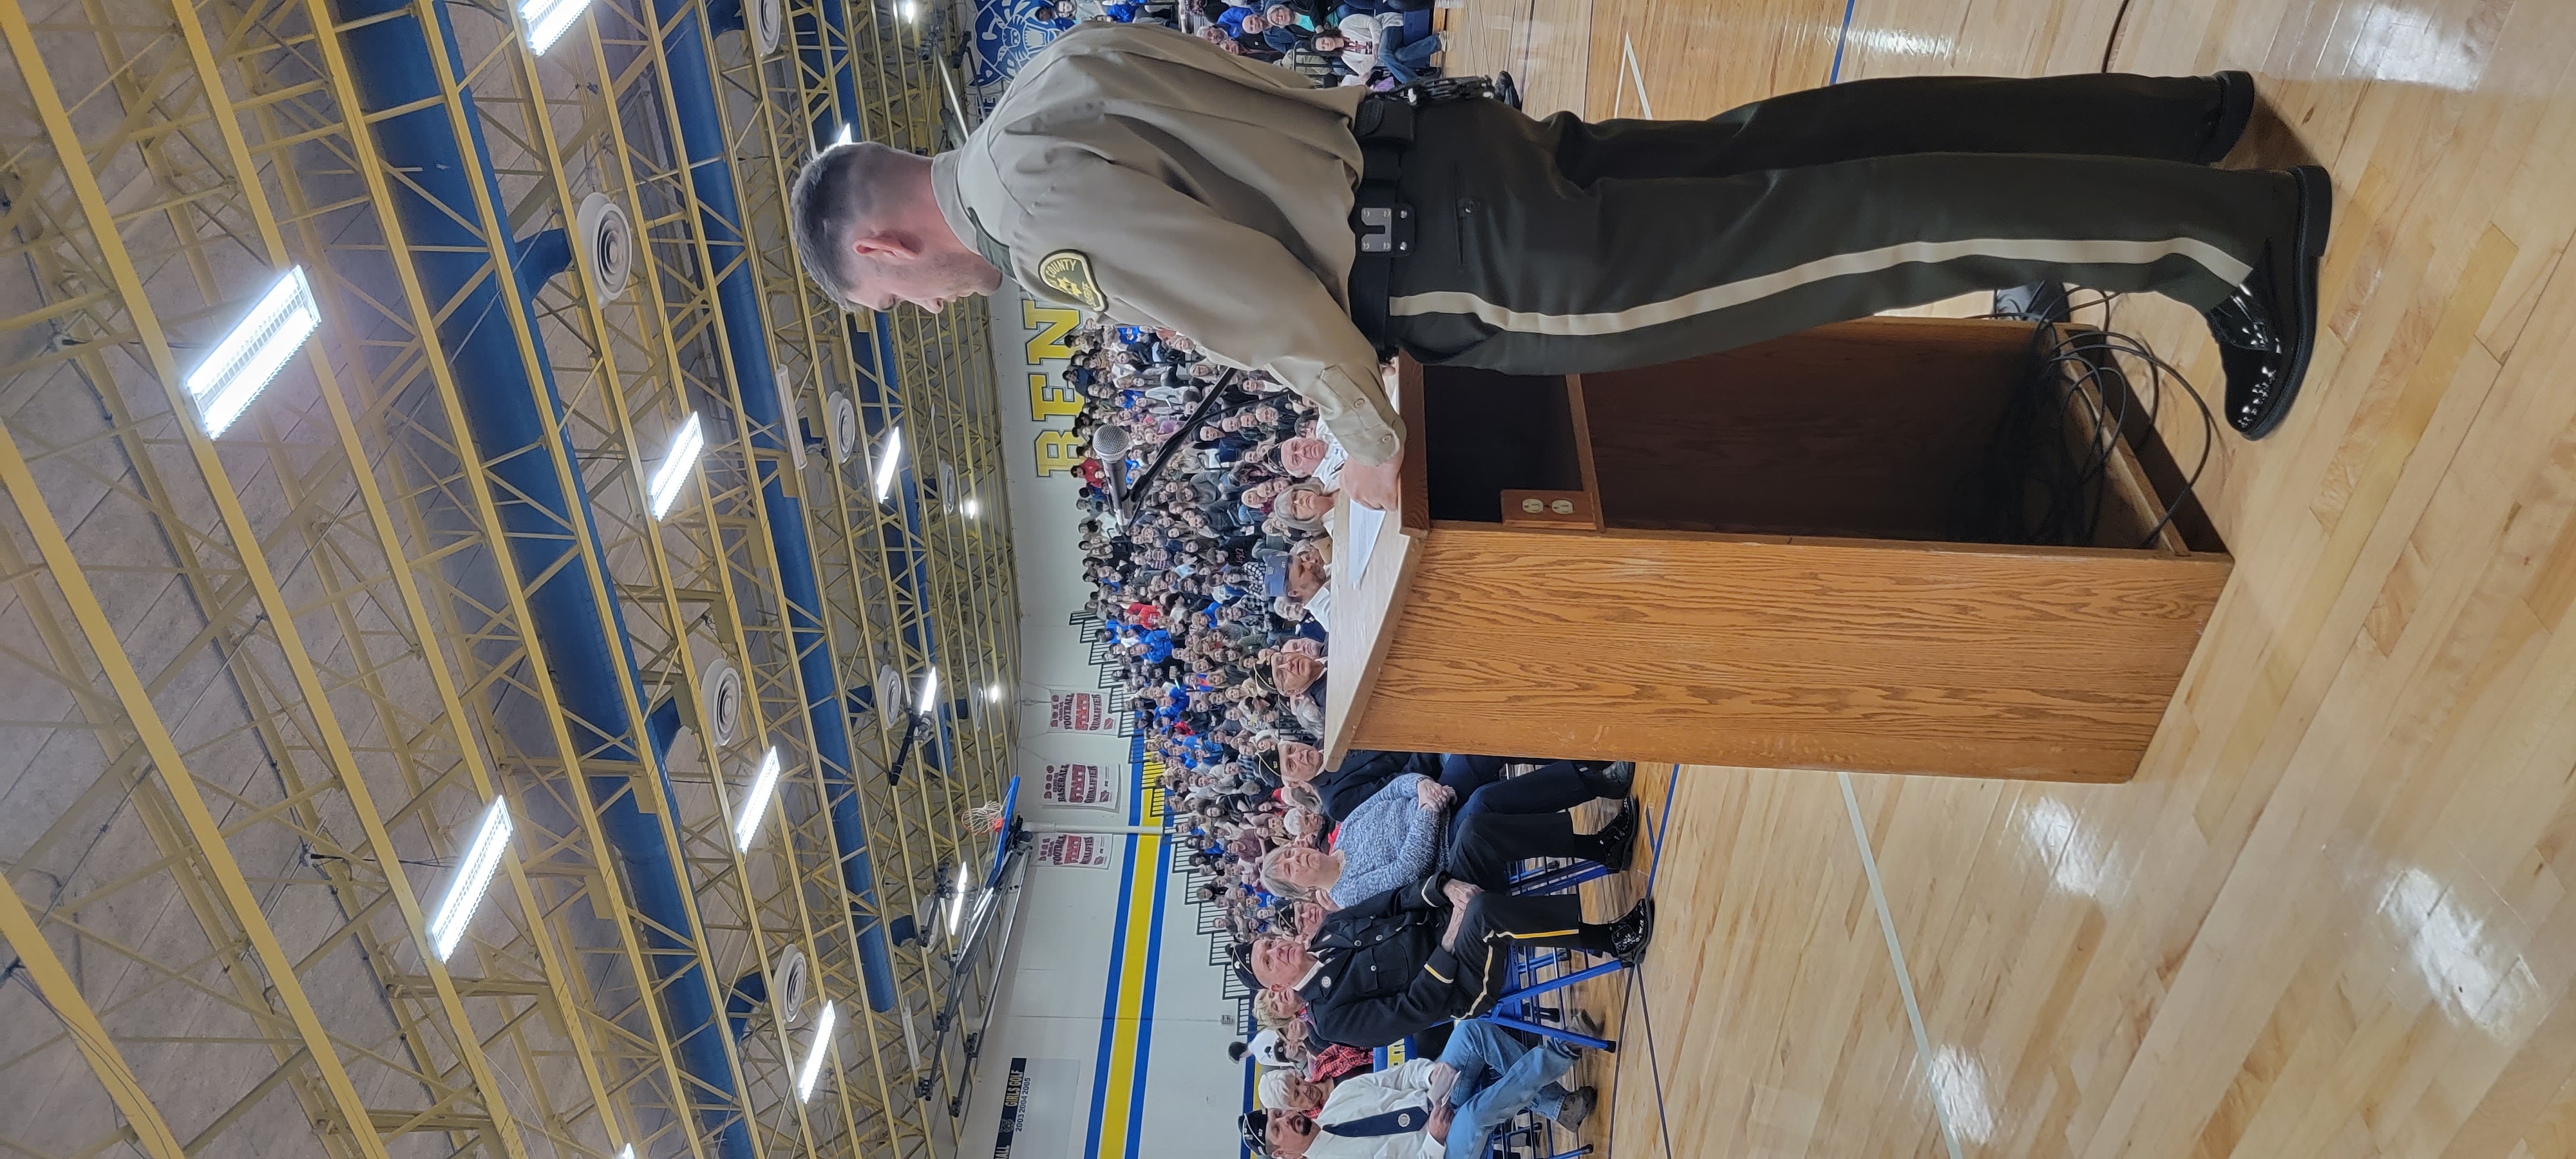 Benton Community's Deputy Brandt speaks at Veterans Day 2022 program